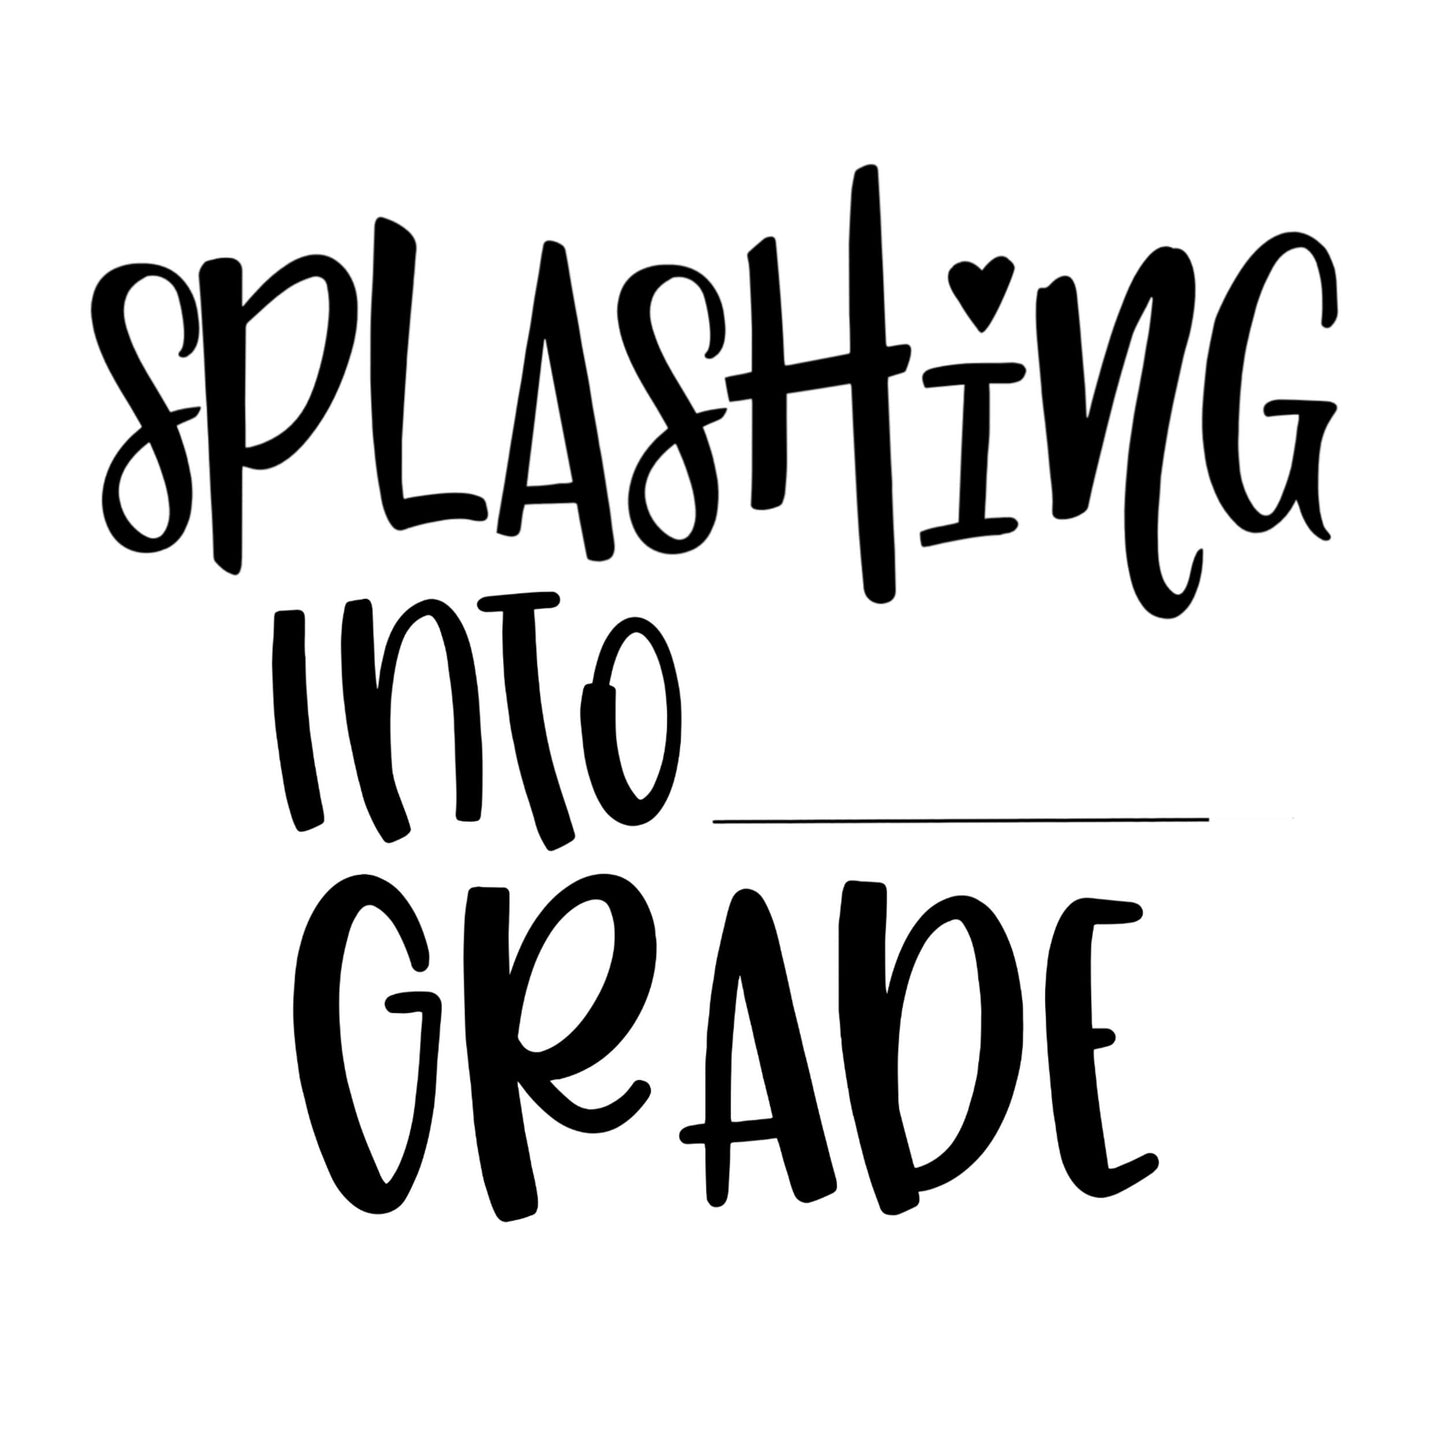 Splashing into _____ grade stencil